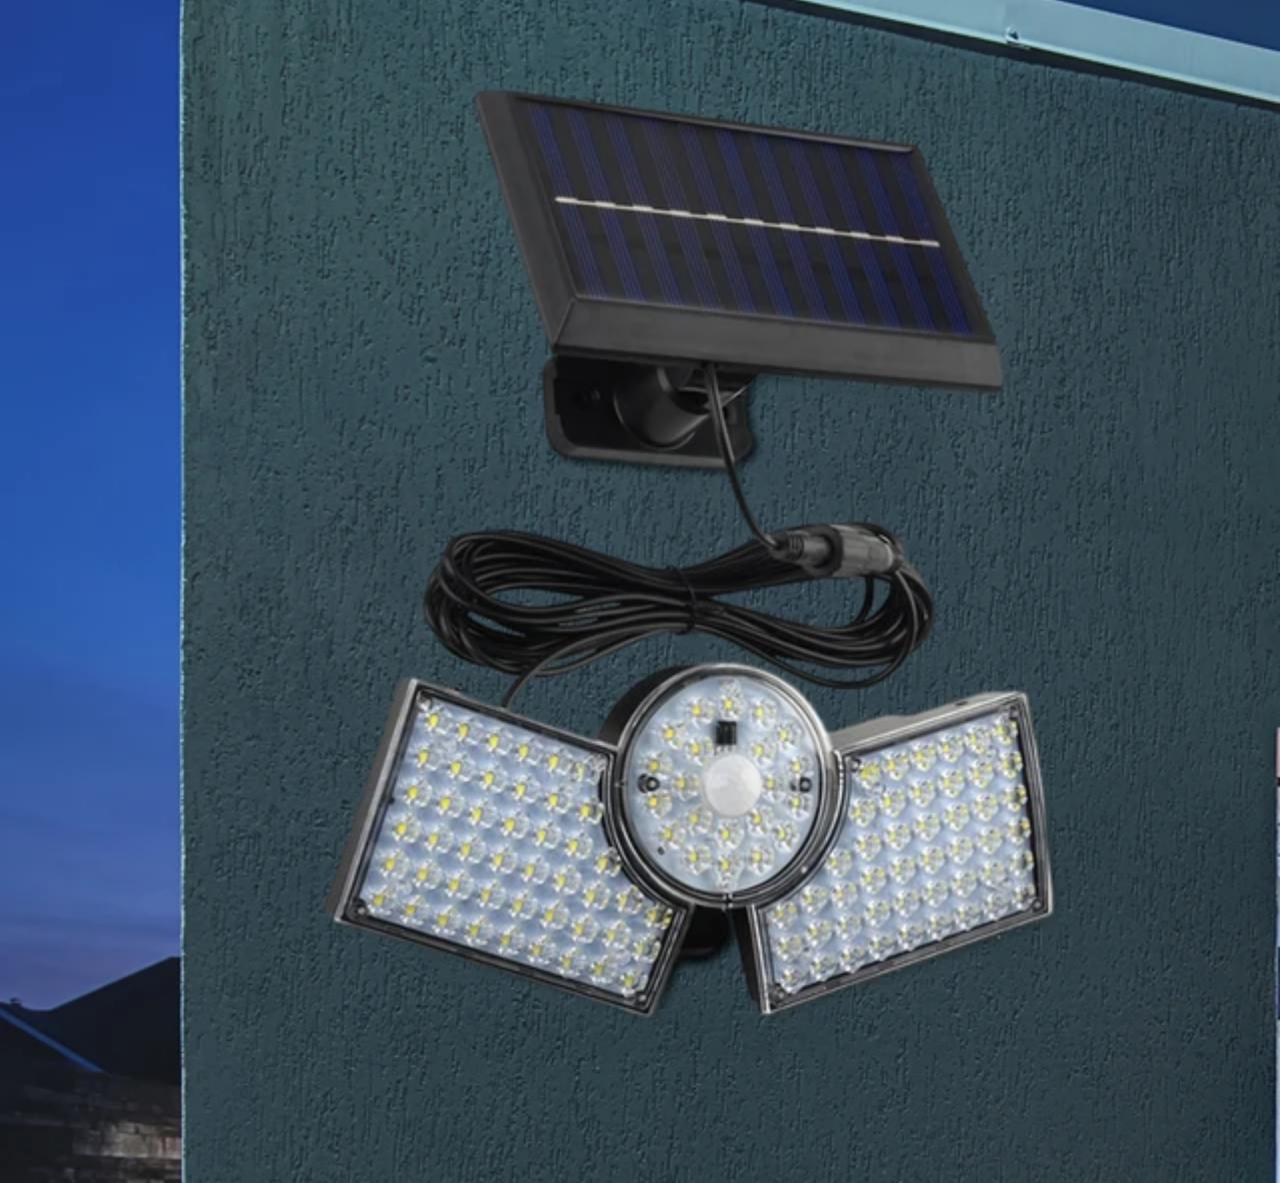 Lampara Farol Solar Foco 20 Led Sensor Movimiento Exterior